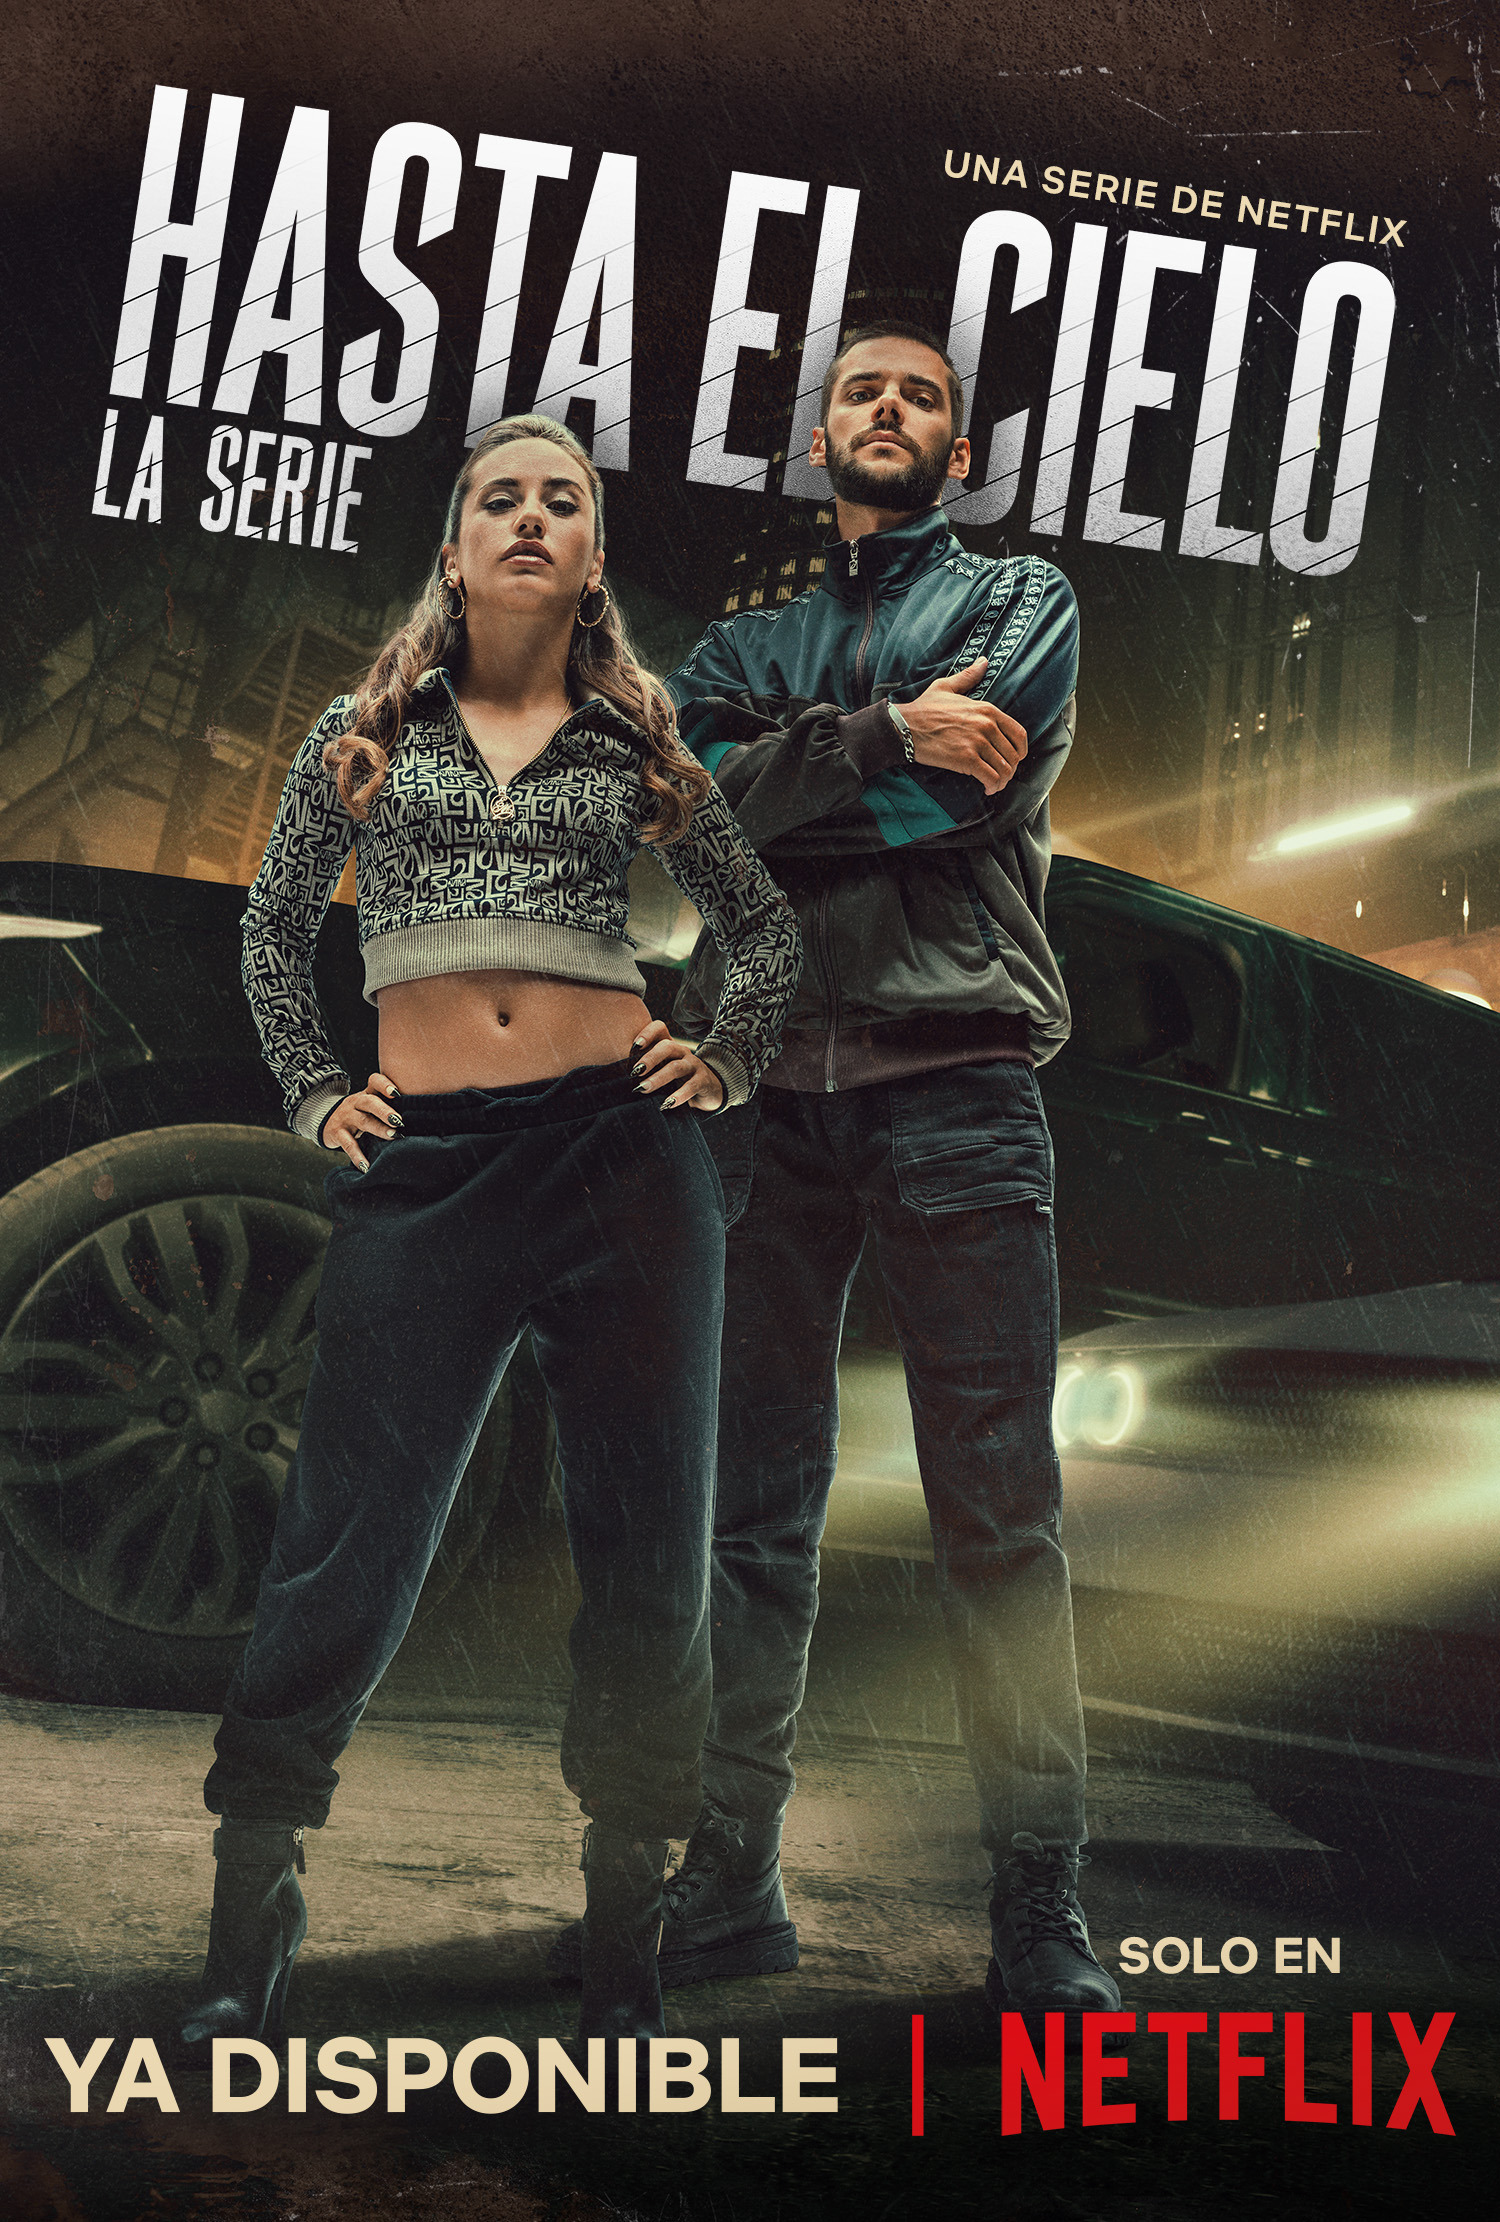 Mega Sized TV Poster Image for Hasta el cielo: La serie (#3 of 7)